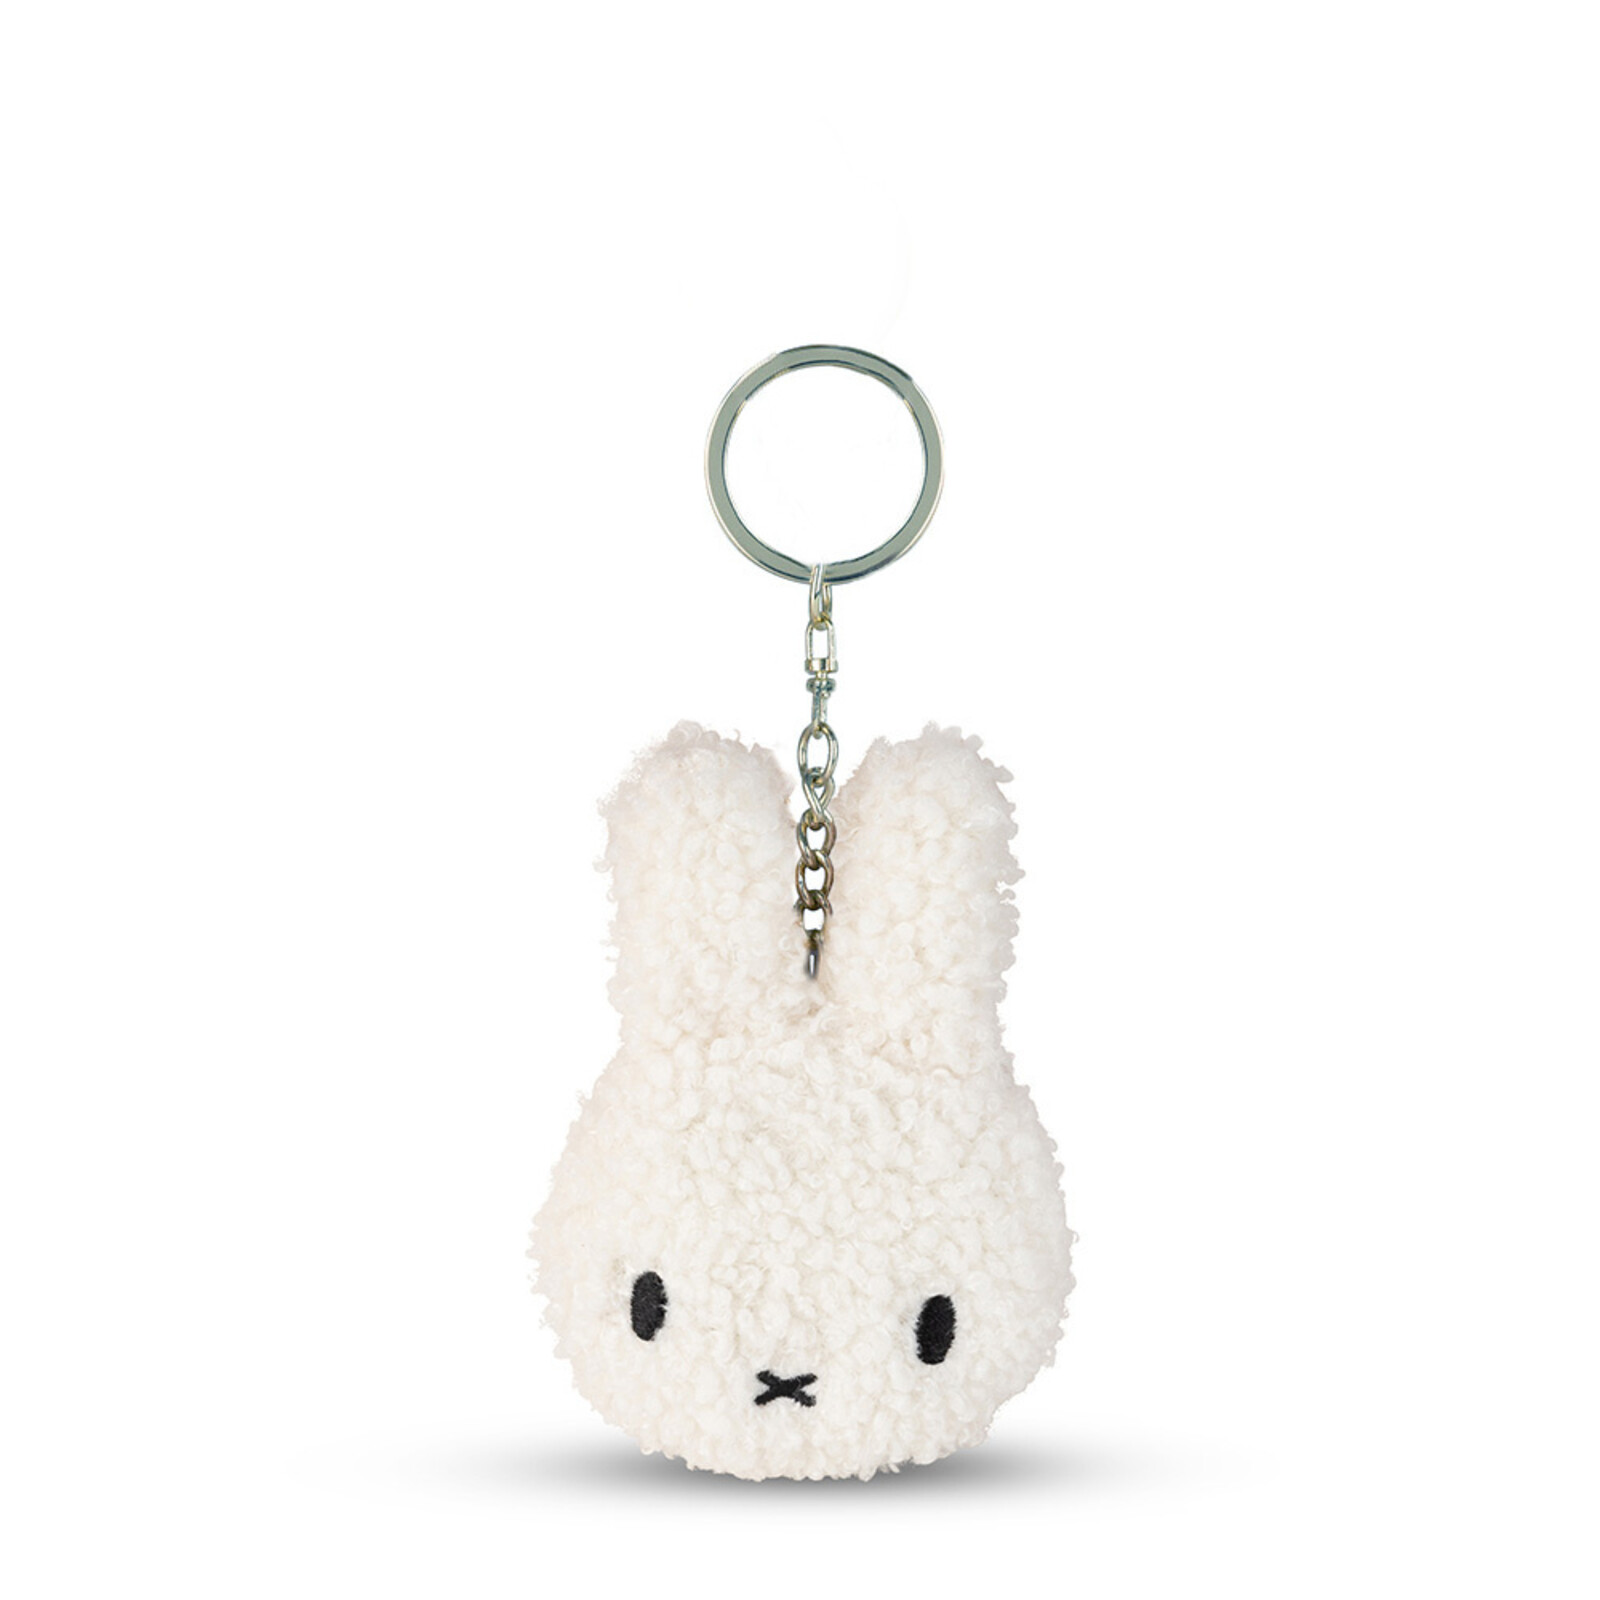 Miffy Flat Keychain Tiny Teddy Cream - 10 cm - 4"